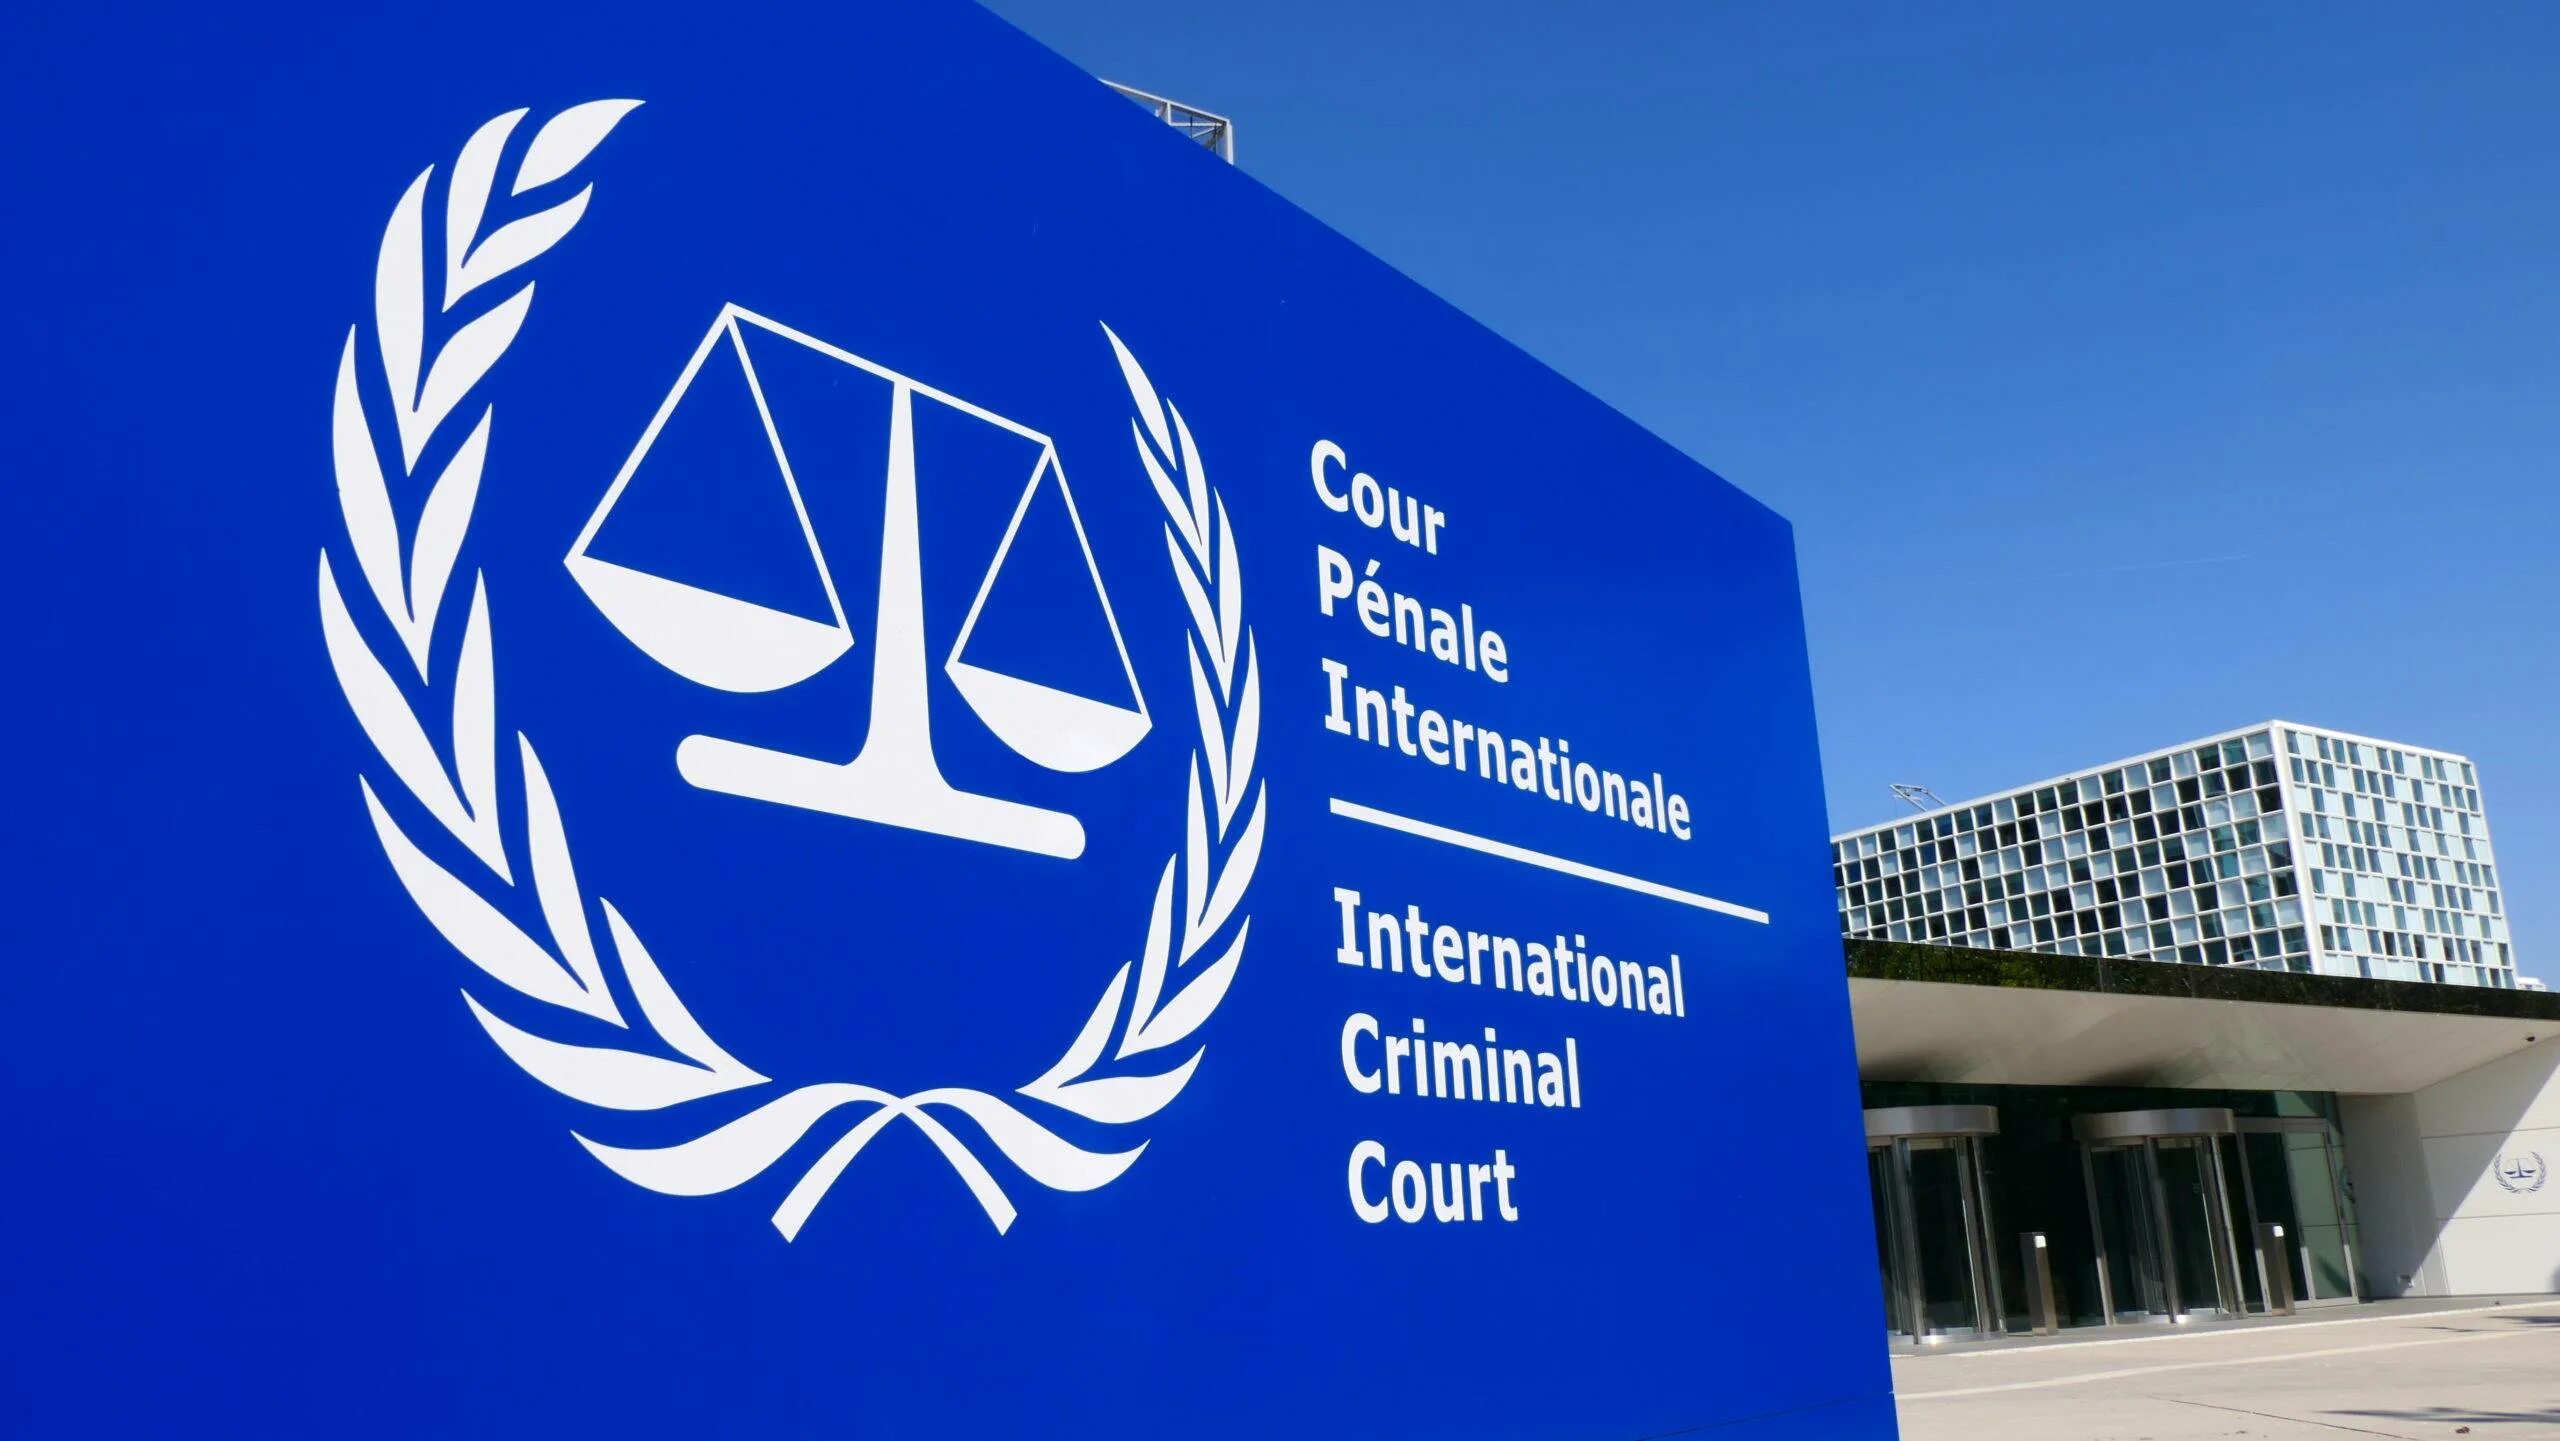 Международный Уголовный трибунал (Гаага). Международного уголовного суда (МУС) В Гааге. Международный Уголовный суд ООН здание Гаага. Международный Уголовный суд ООН компетенция.